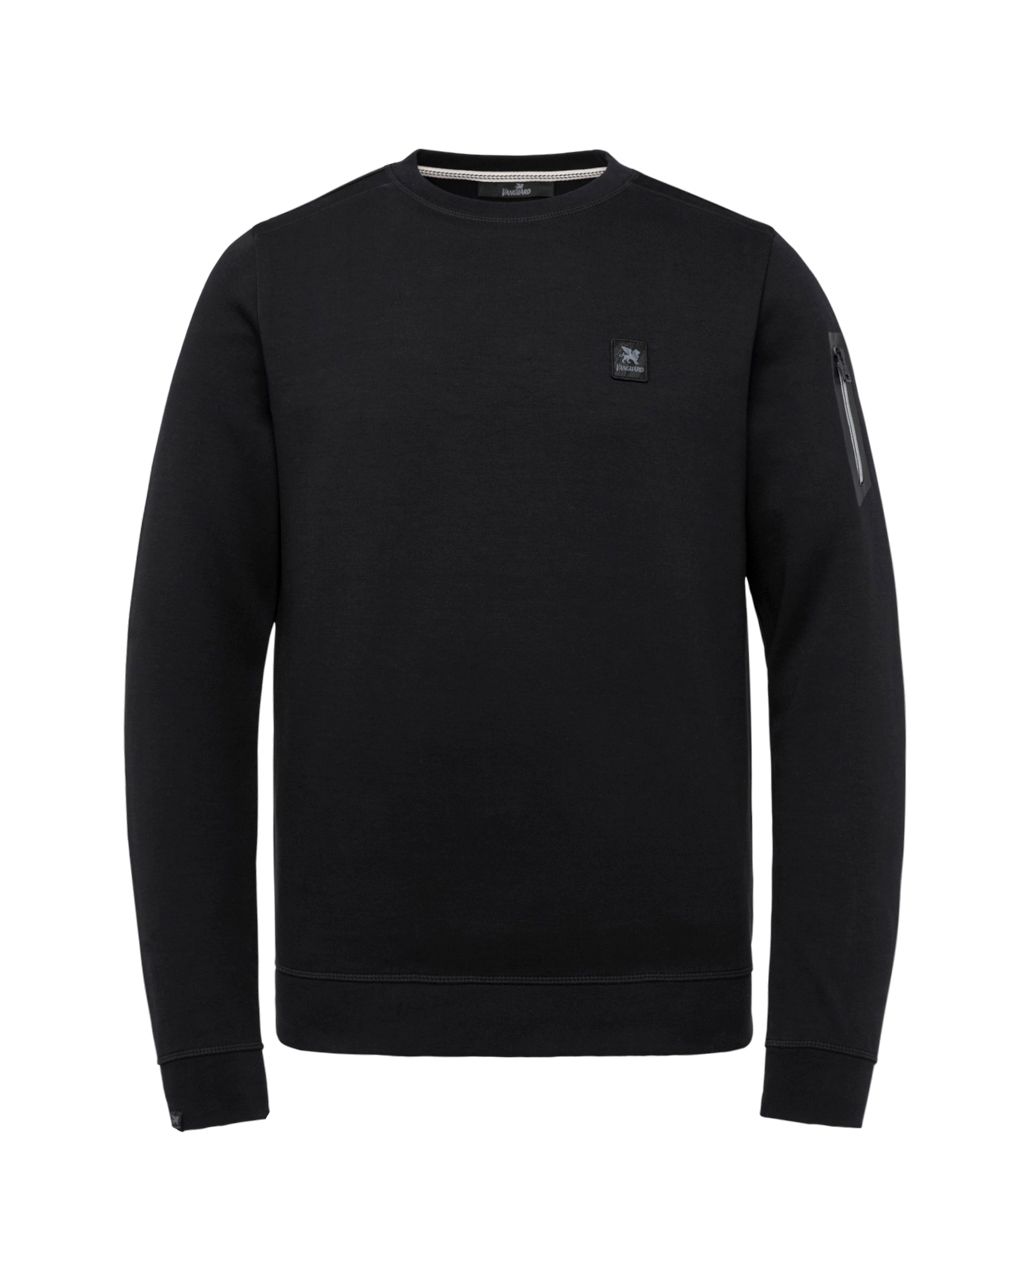 Vanguard Sweater Zwart 074226-001-L